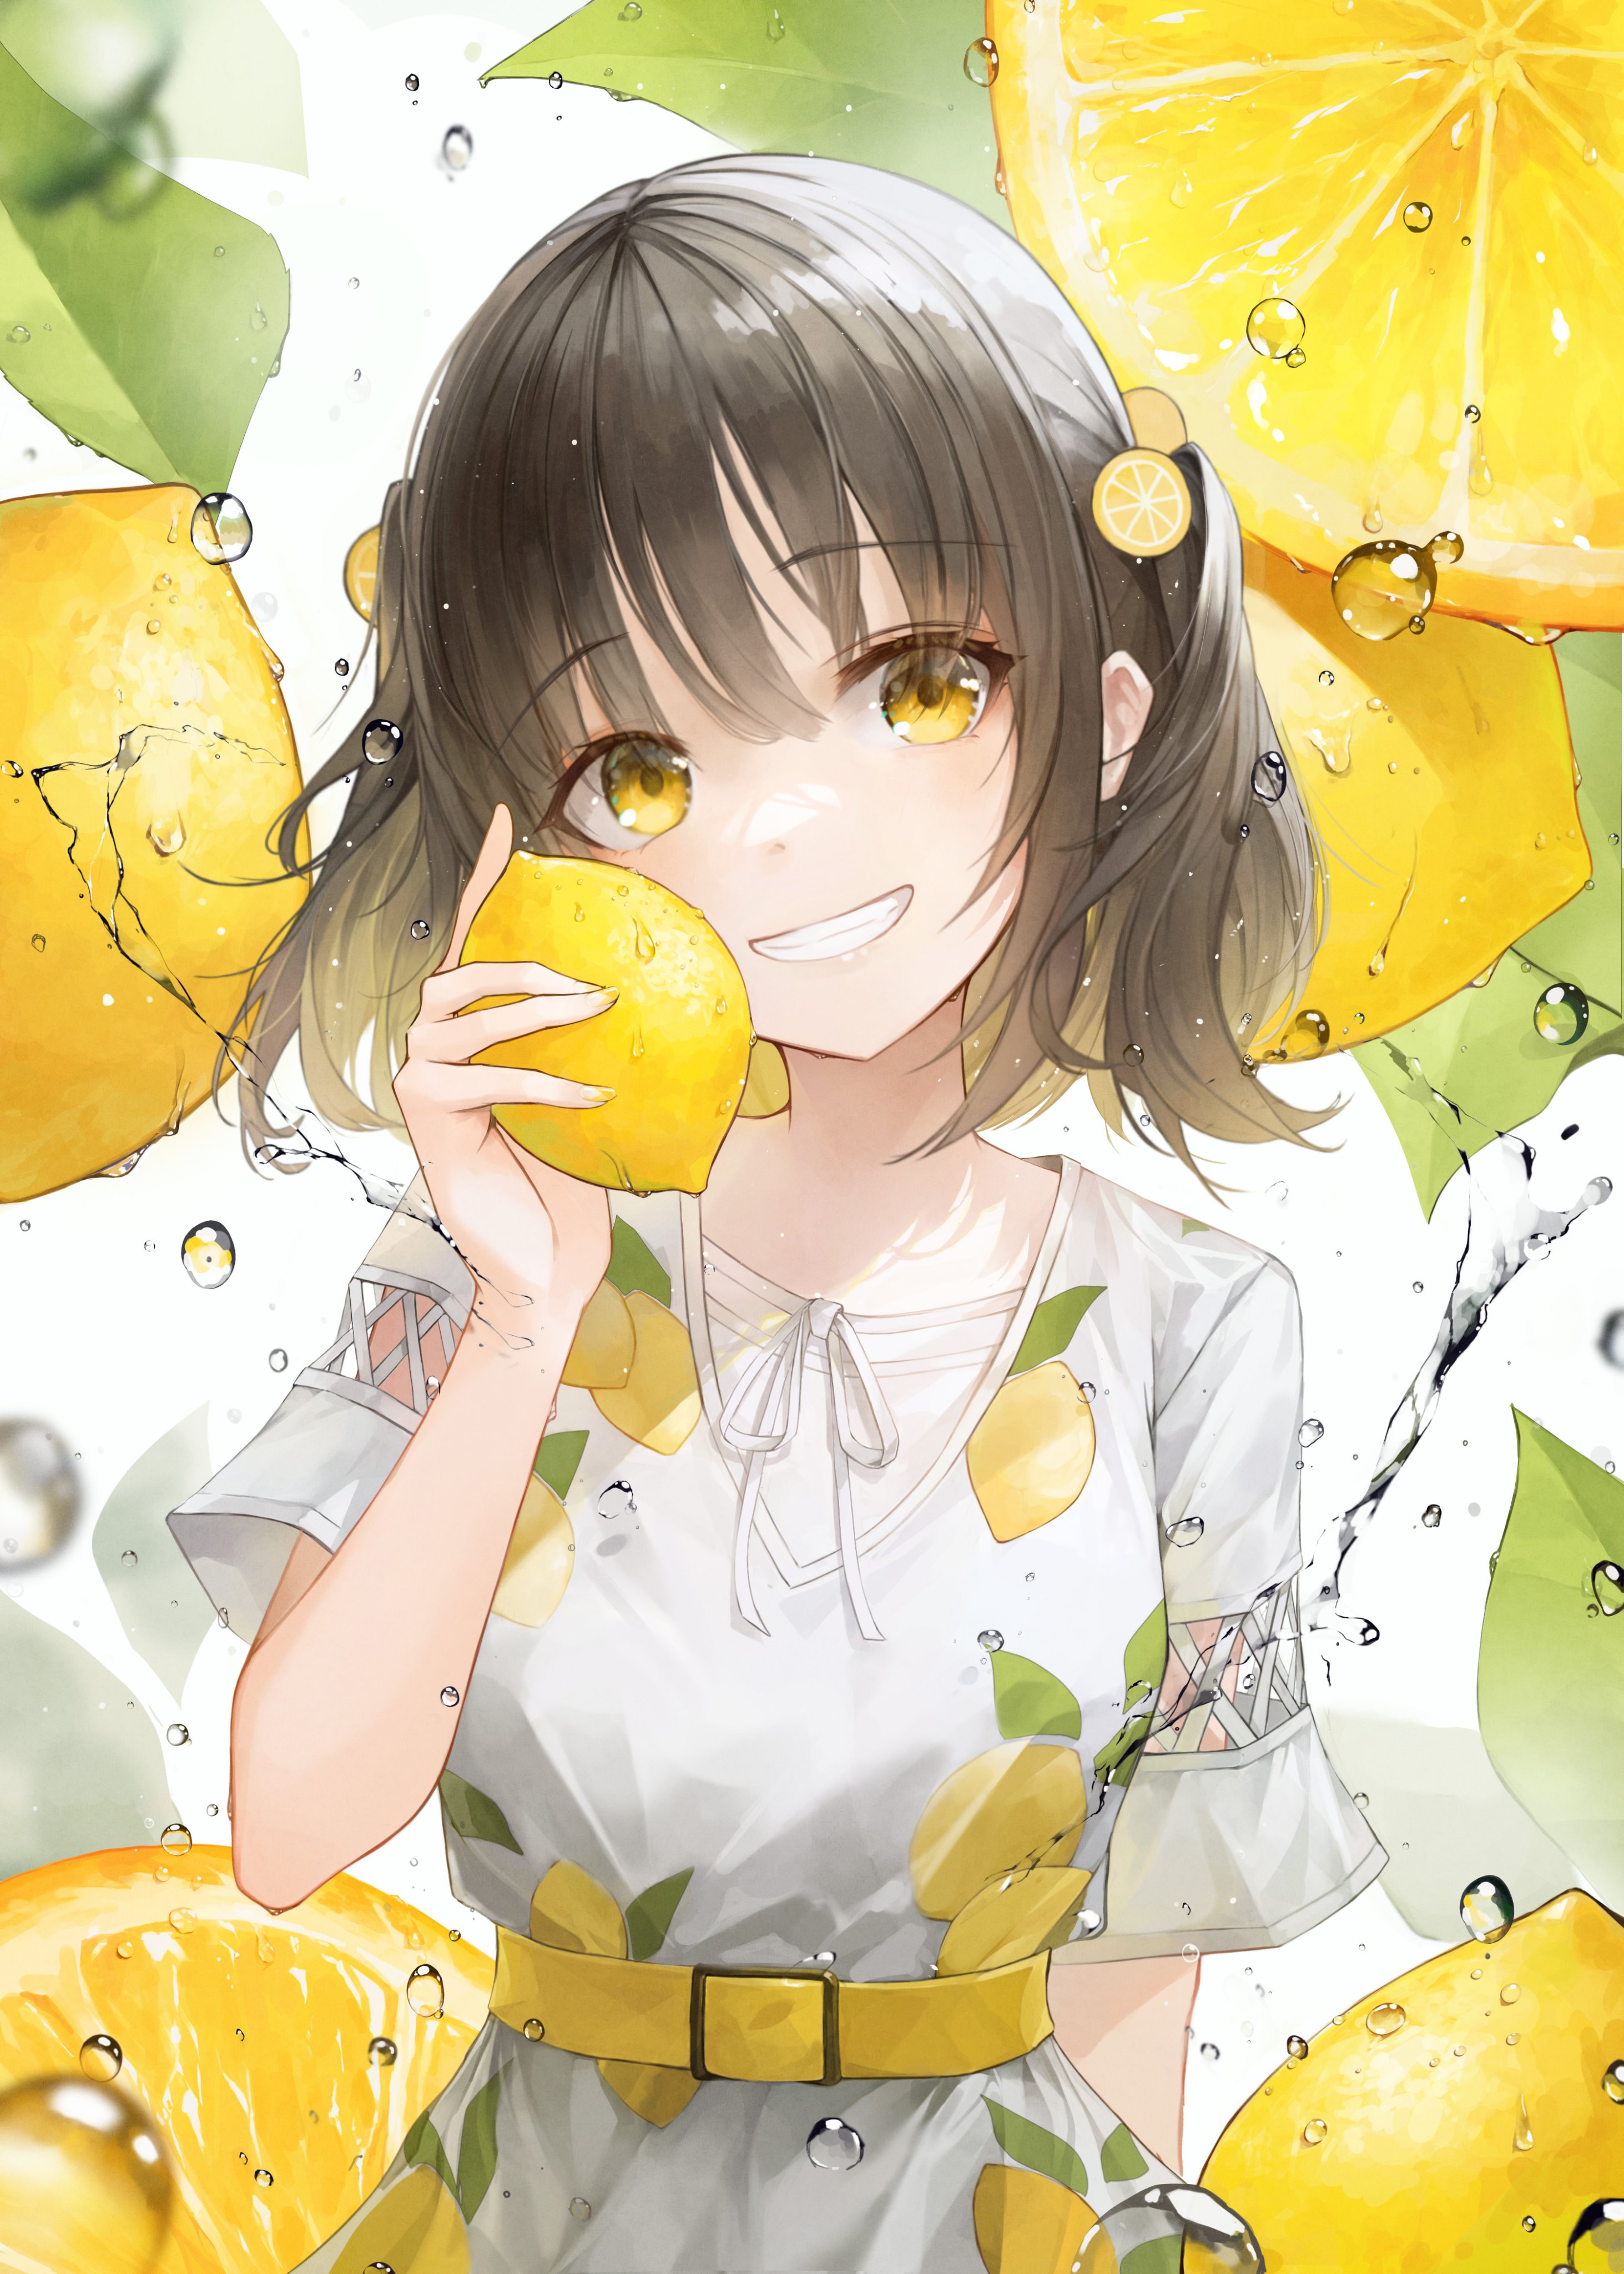 Lemon Meringue Tart - Anime Manga World Wallpapers and Images - Desktop  Nexus Groups